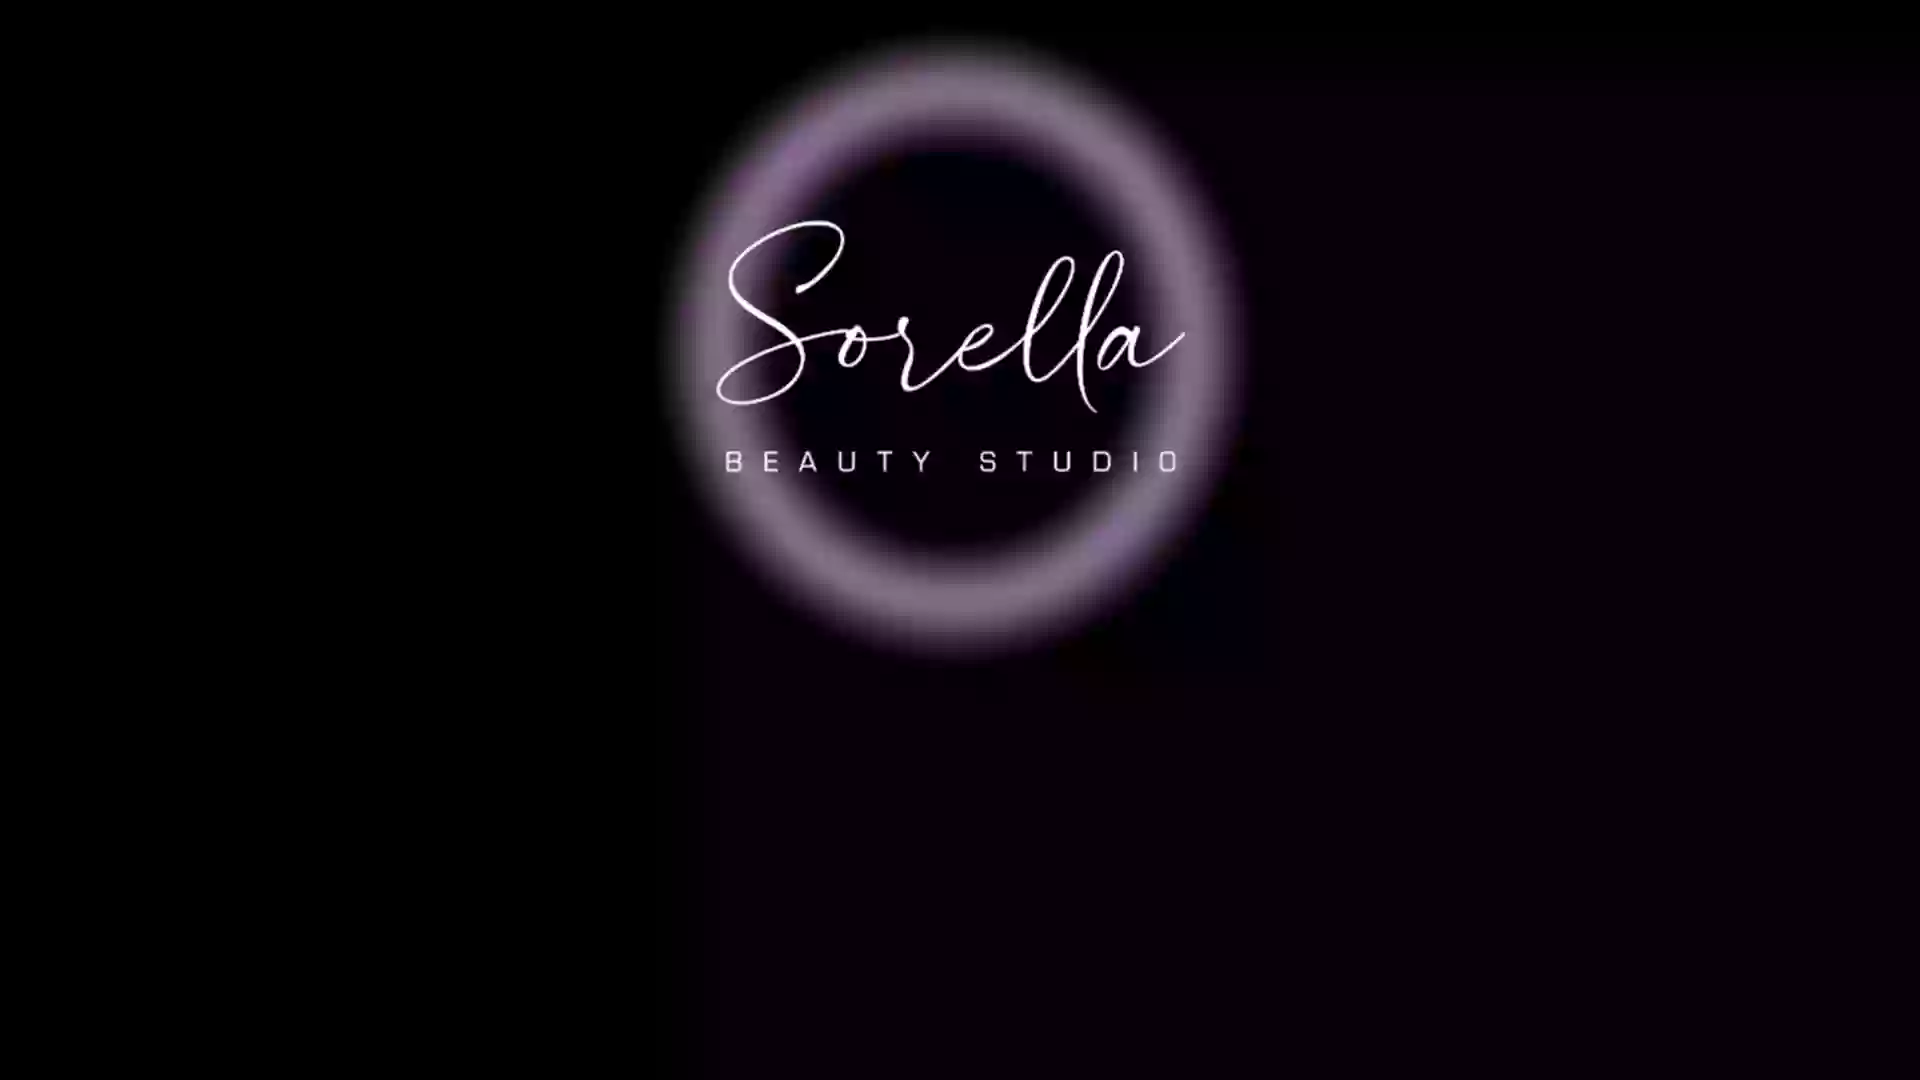 Sorella Beauty Studio